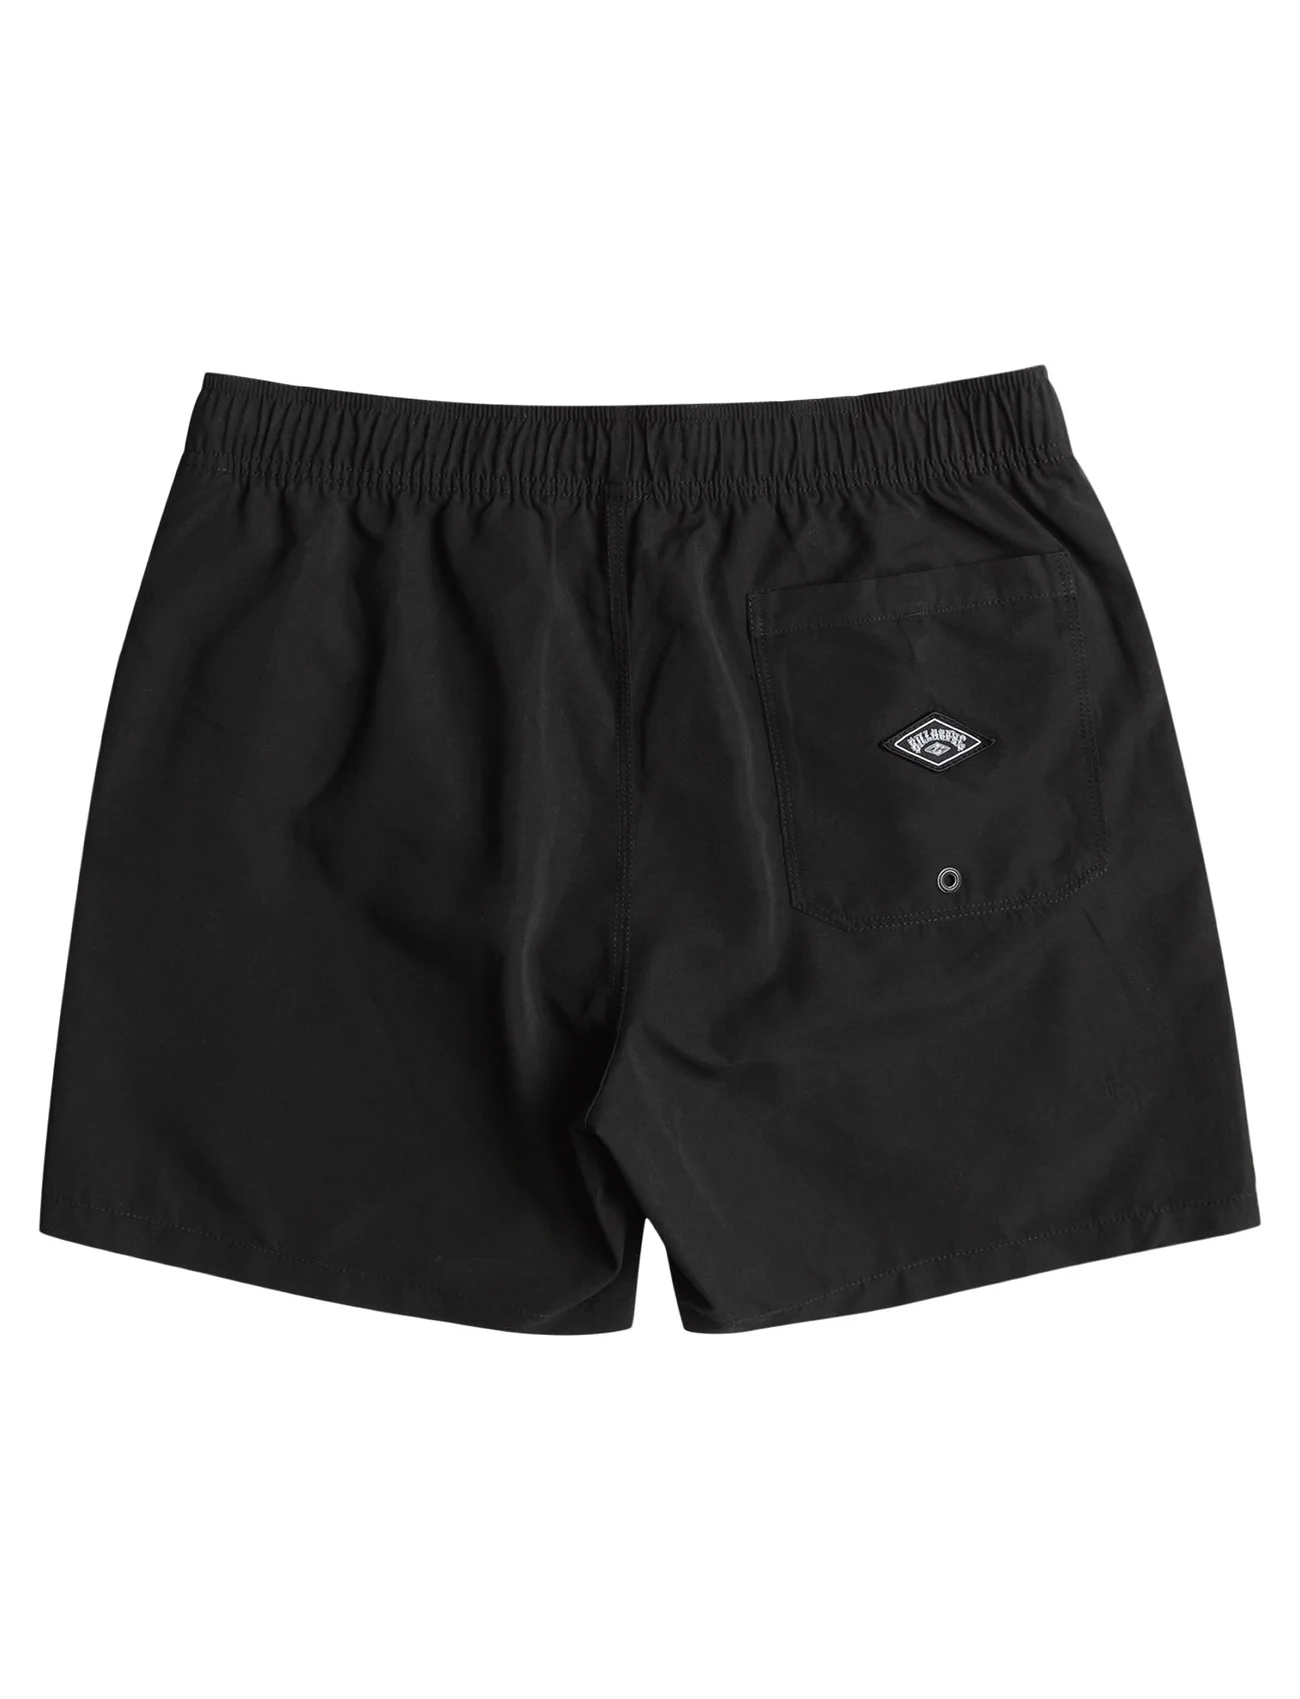 Billabong - ALL DAY HERITAGE LB - swim shorts - black - 1